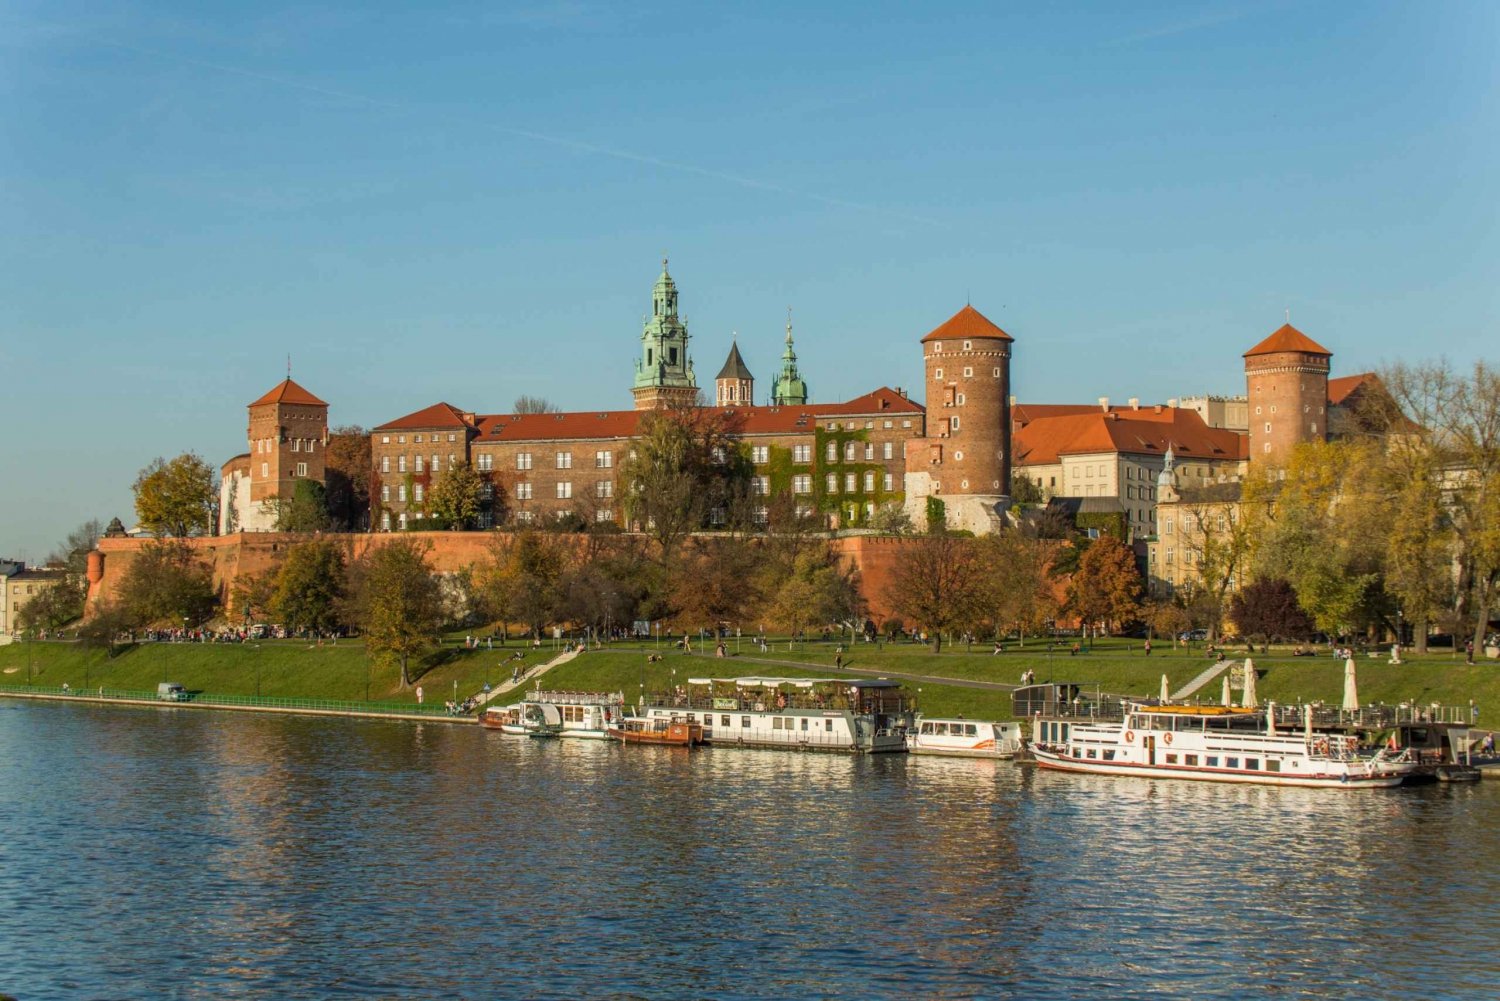 Krakova: Wawelin linna, katedraali ja Rynek-kierros lounaalla.